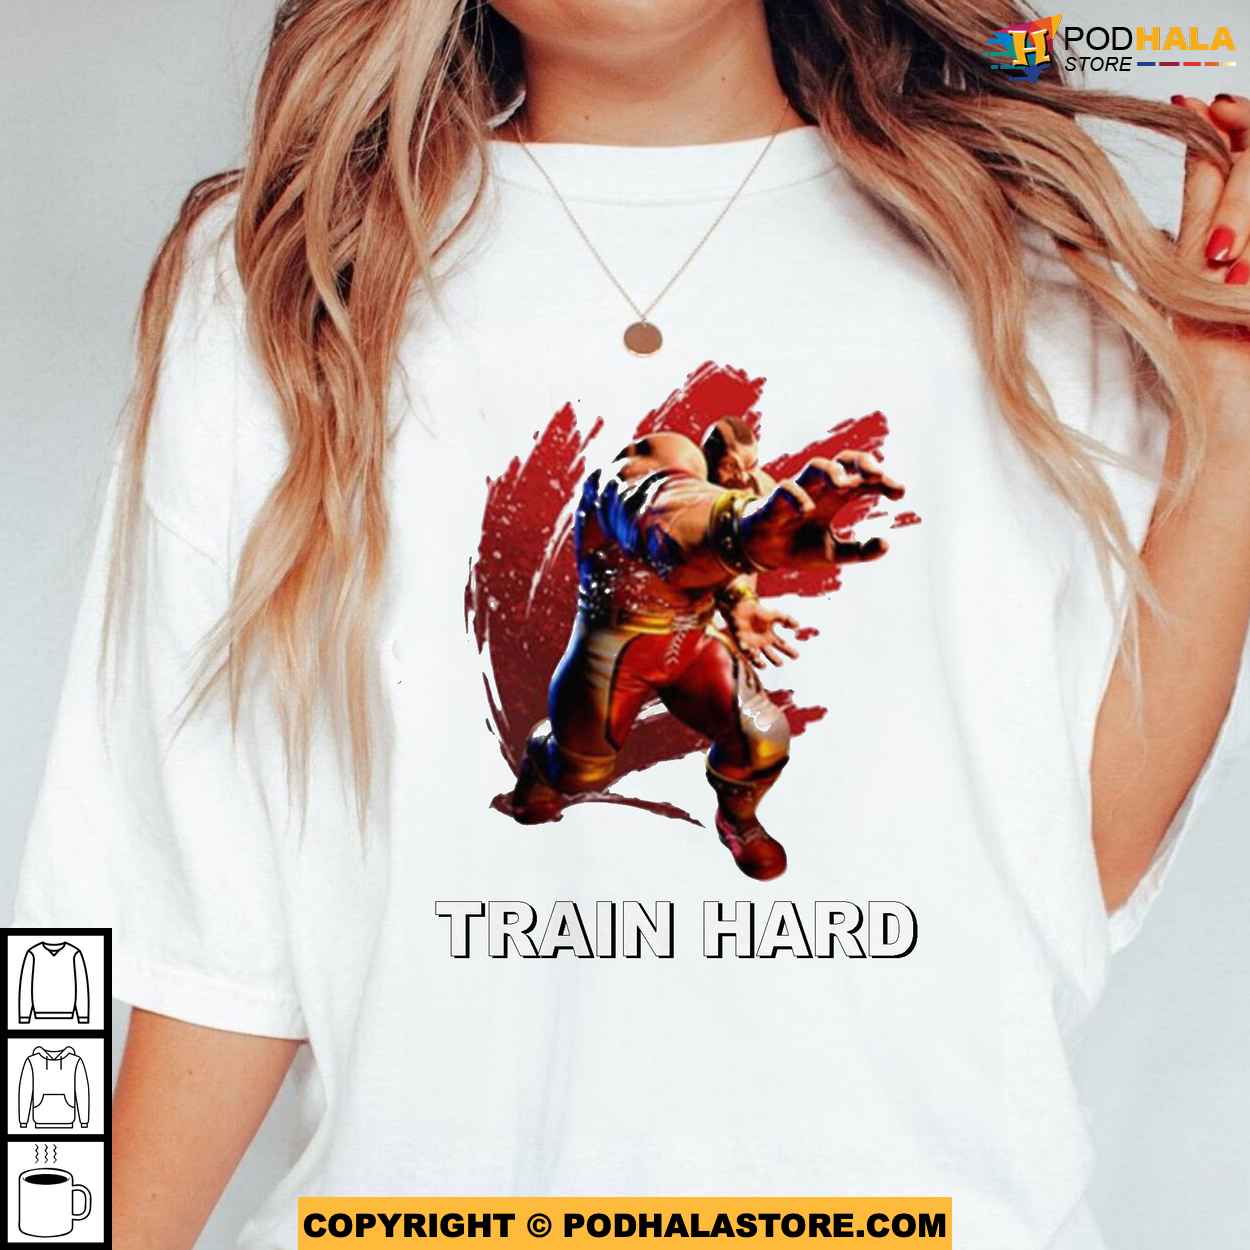 Train Hard Motivational Gym Shirt with Zangief-Inspired Design